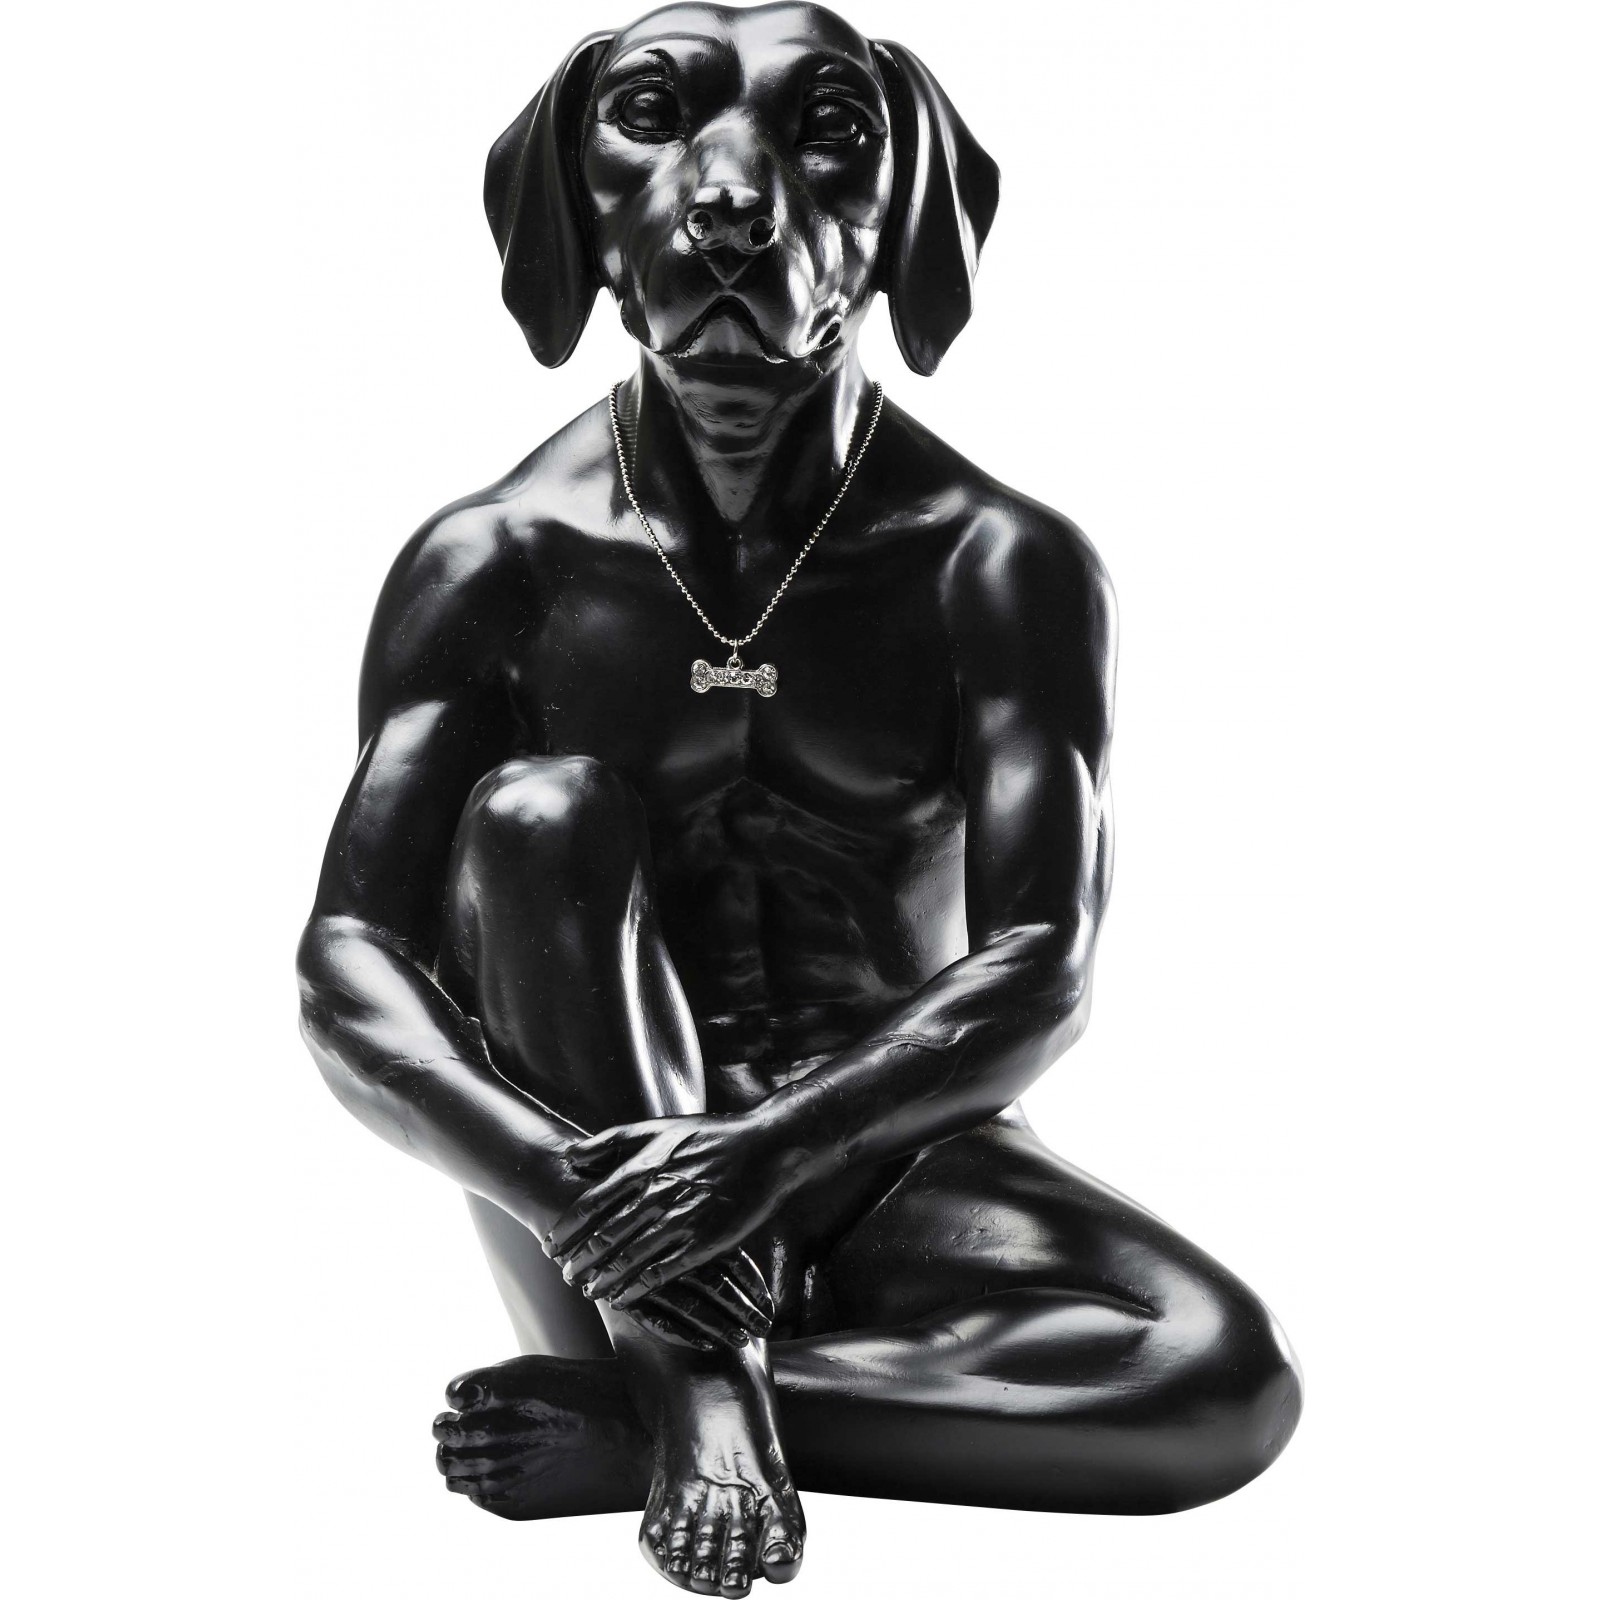 Déco gangster chien noir, Kare design